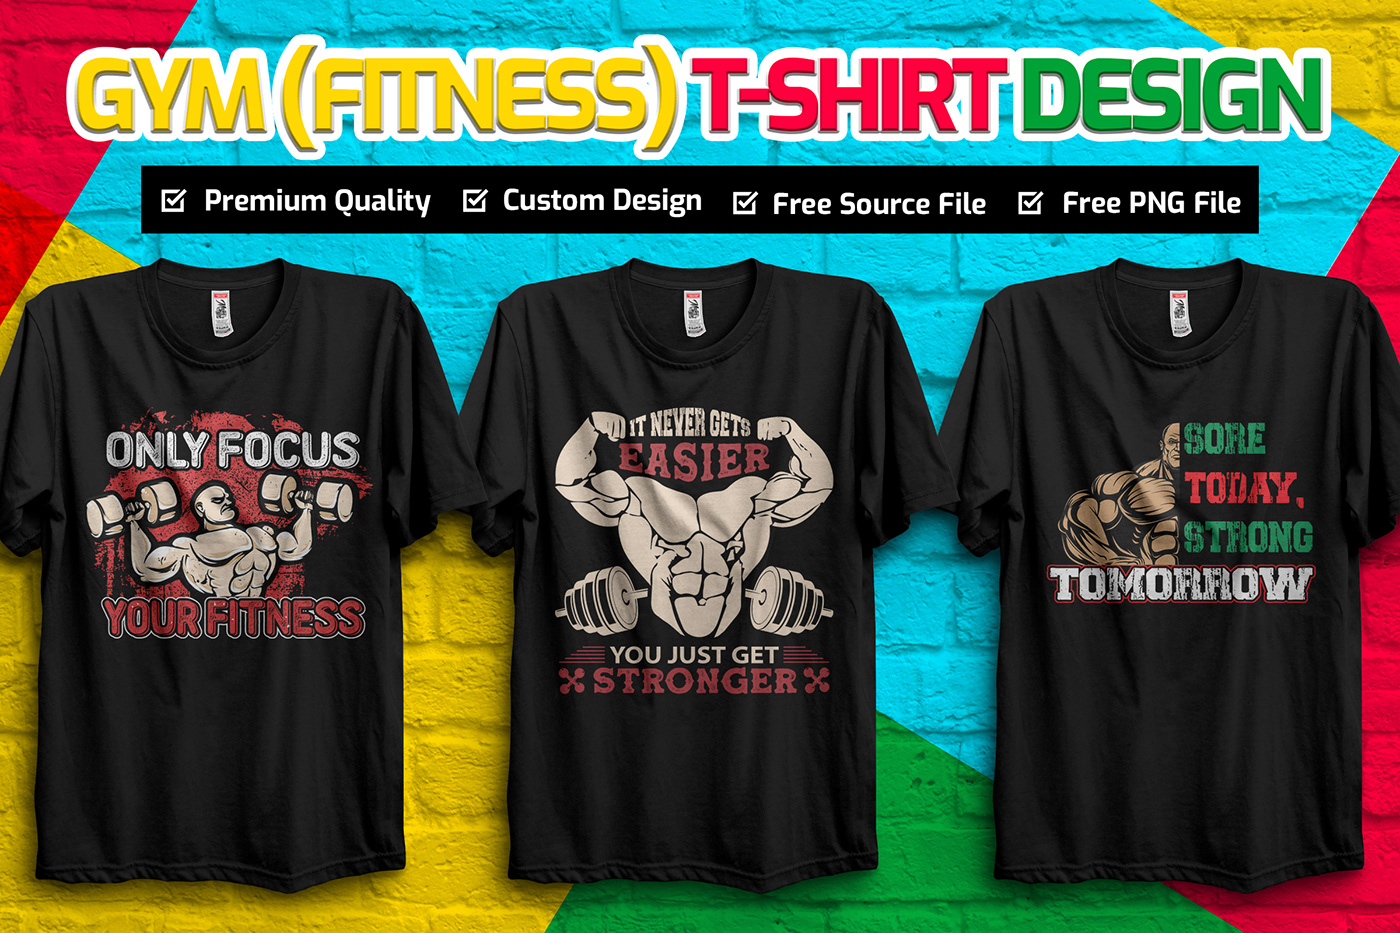 "gym t shirt design ideas"
"fitness t shirt quotes"
"motivational gym shirts"
"fitness shirt